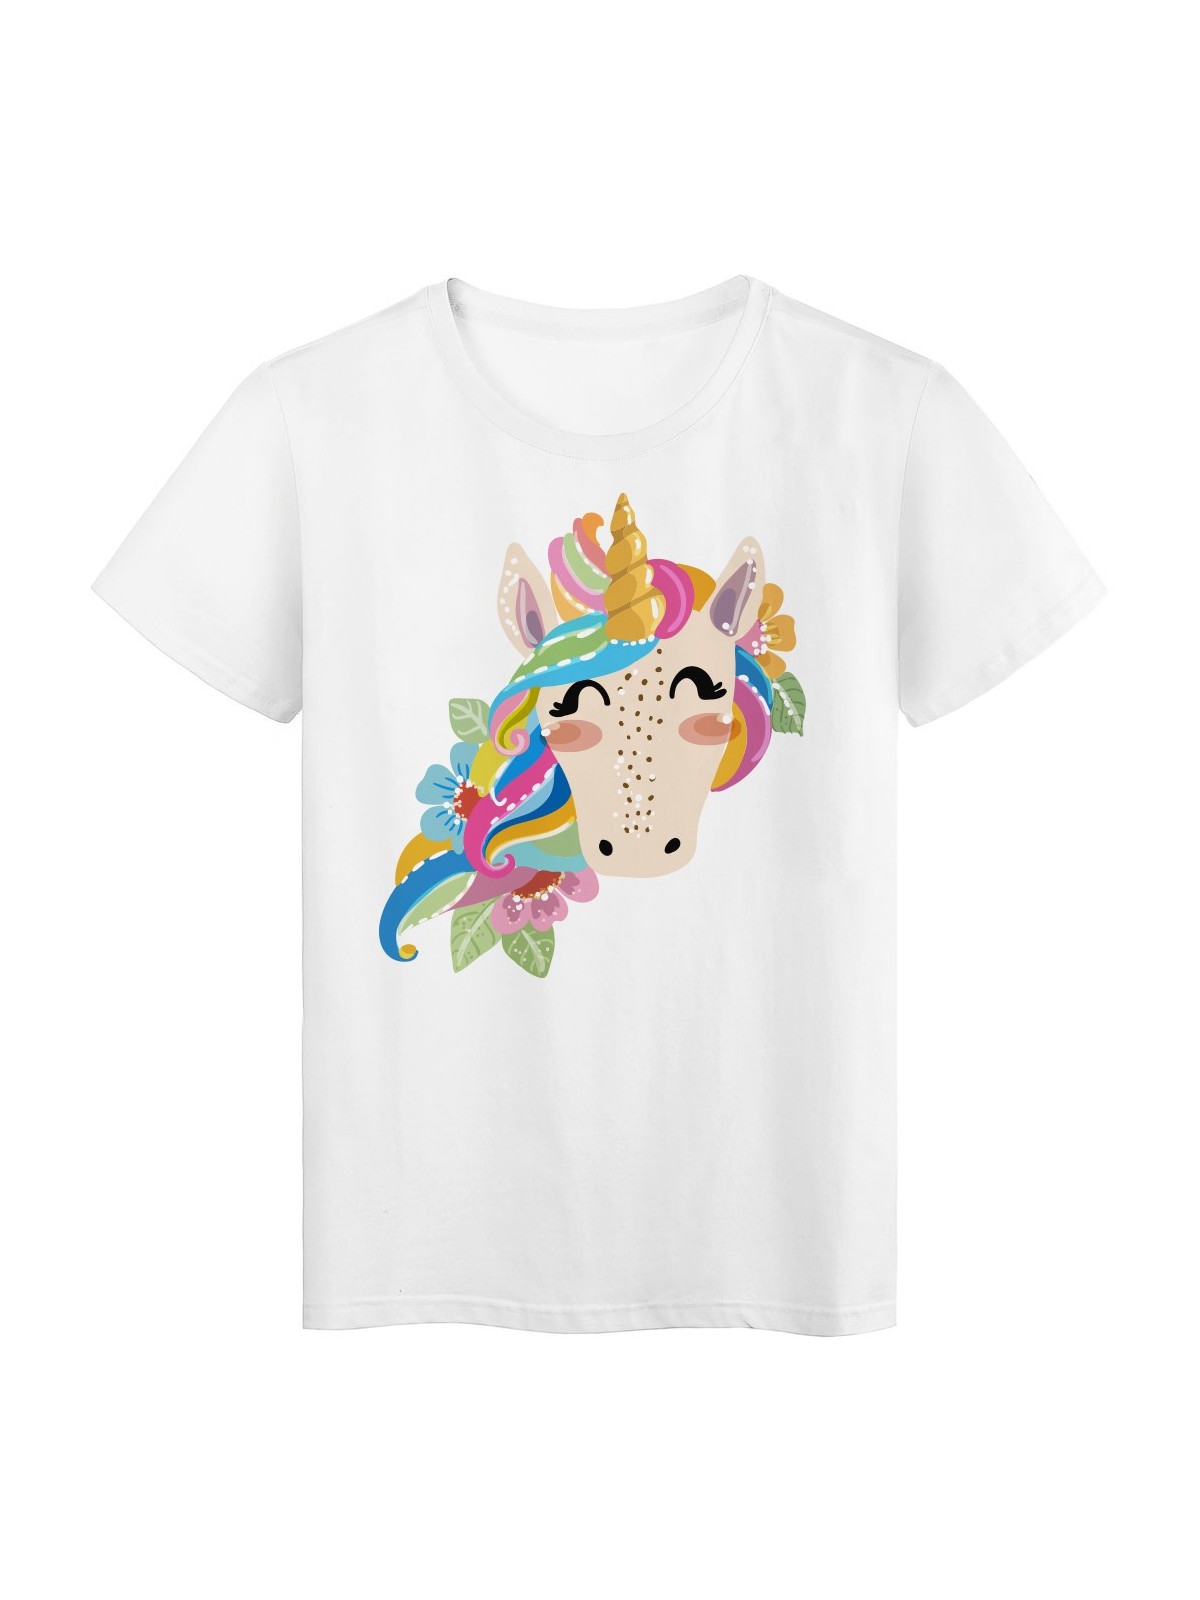 T-Shirt blanc Design cheval licorne couleurs rÃ©f Tee shirt 2169